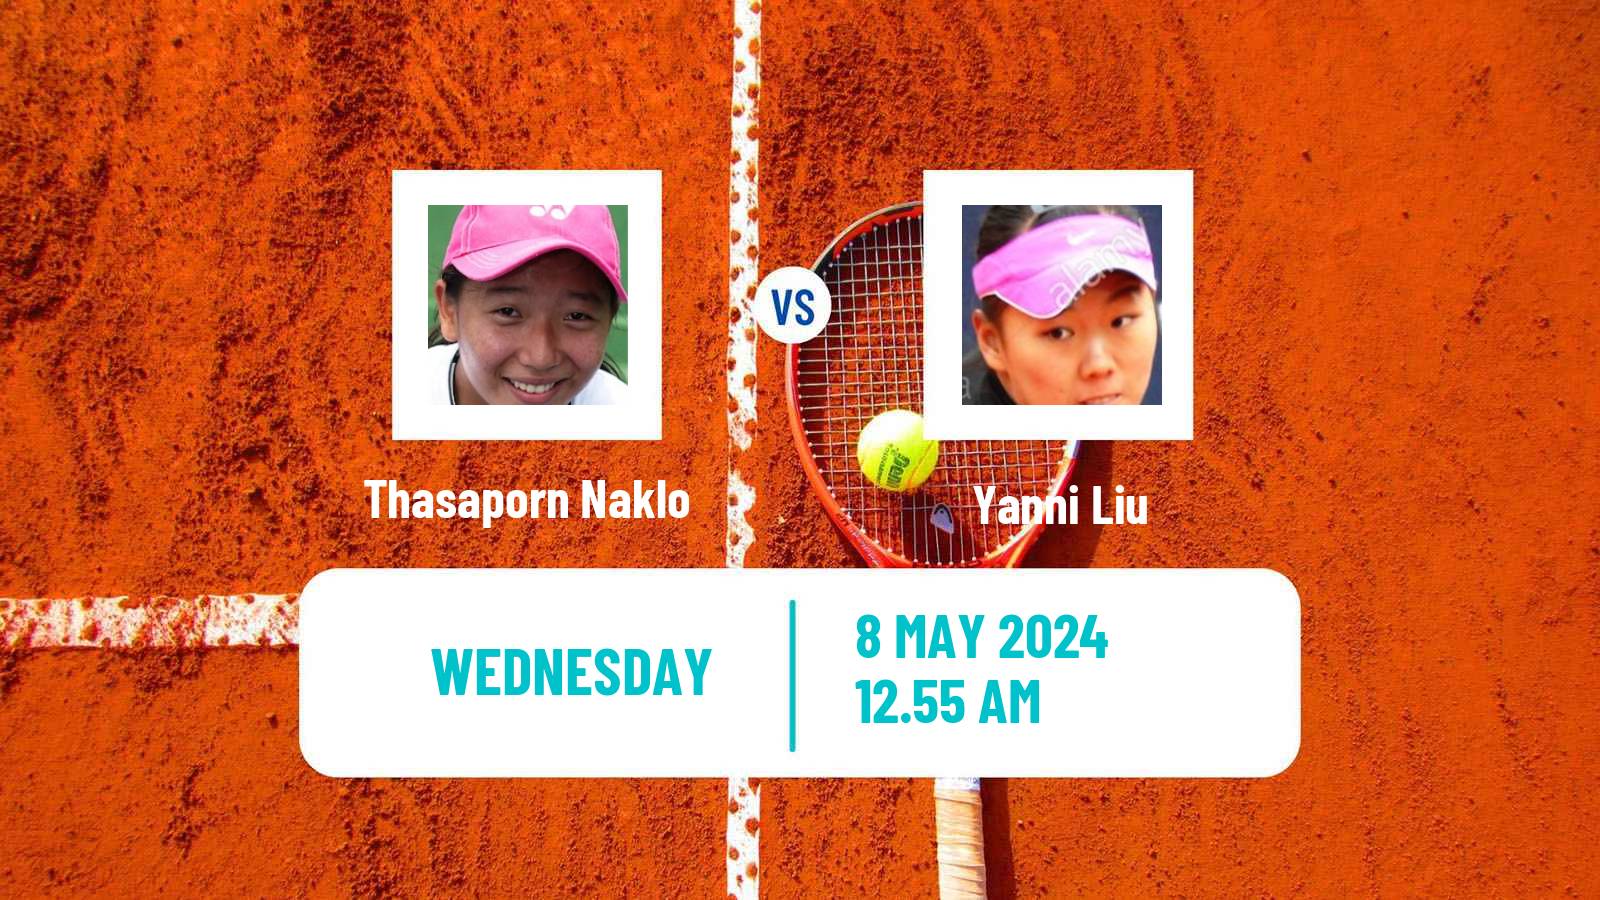 Tennis ITF W75 Luan Women Thasaporn Naklo - Yanni Liu